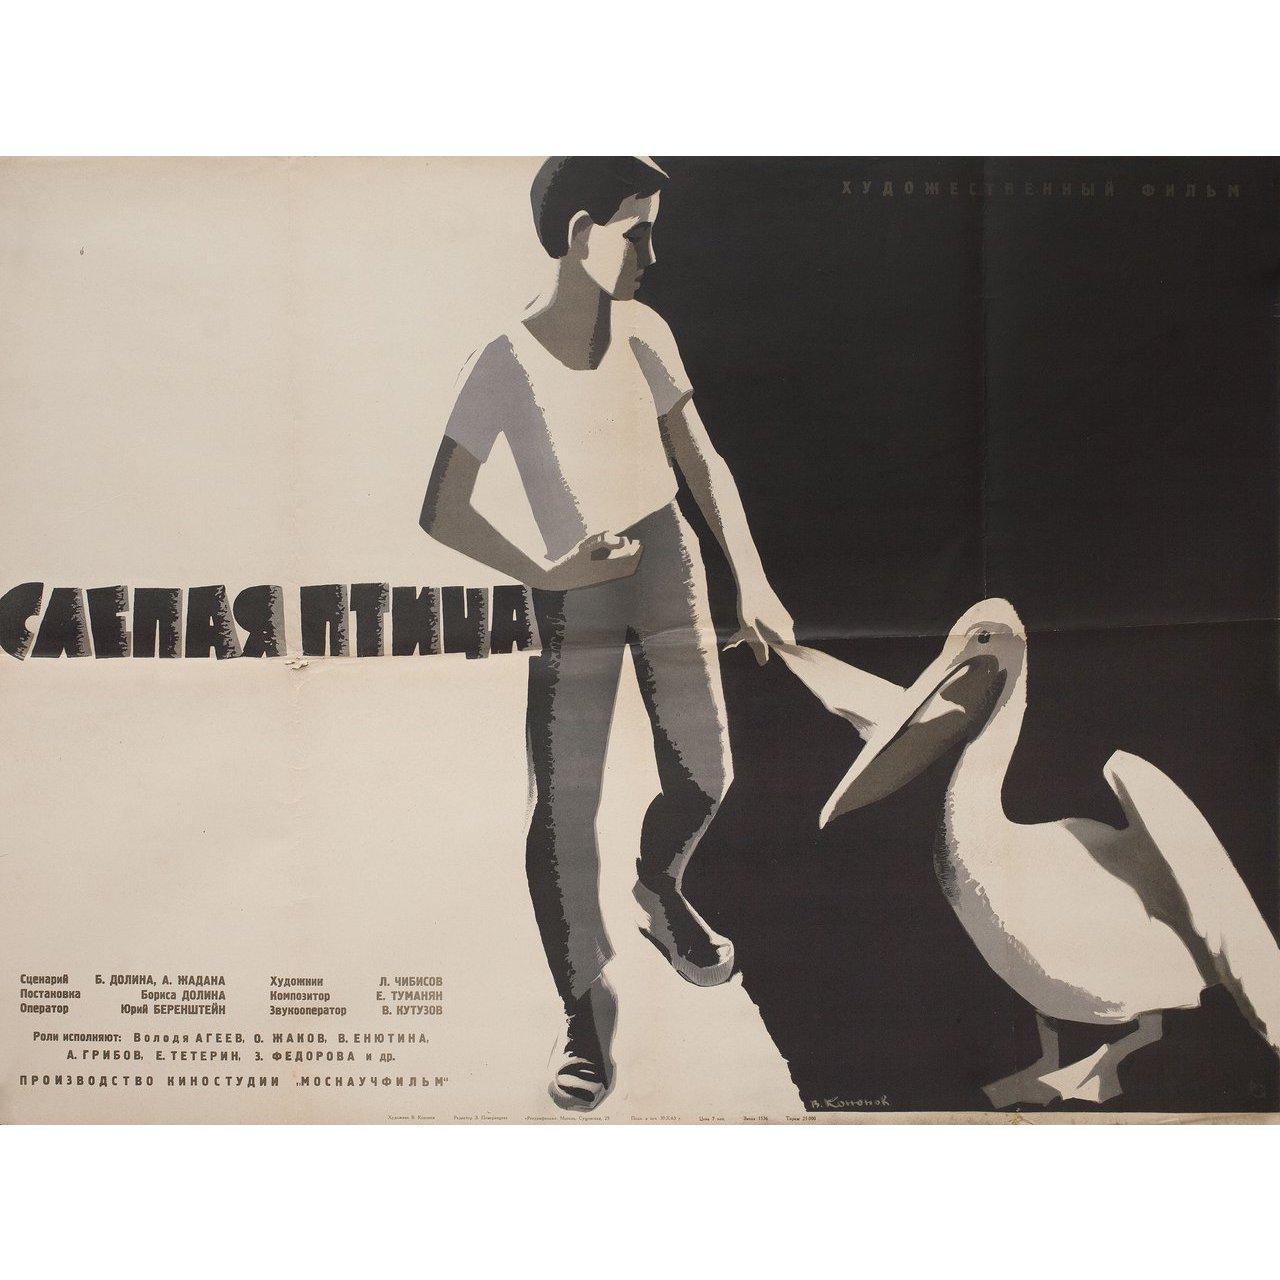 Original 1965 Russian B1 poster by Kononov for the film The Blind Bird (Slepaya ptitsa) directed by Boris Dolin with Volodya Aseyev / Olya Blok / Vladimir Lukyanov / Aleksei Gribov. Very Good condition, folded. Many original posters were issued